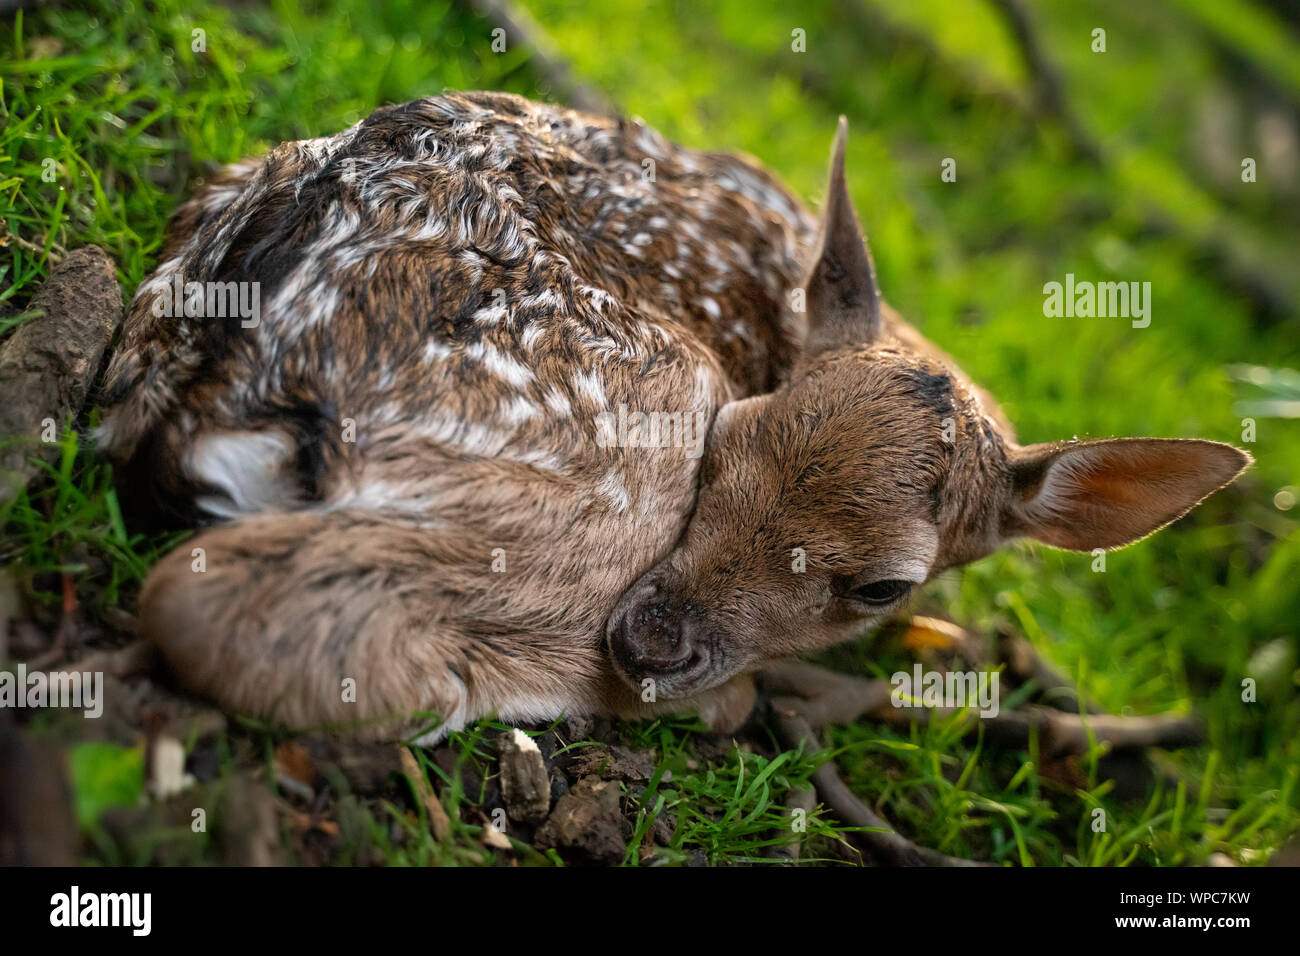 Cute Damwild fawn. Close-up baby Tier. Adorable neugeborenes Rehkitz. Stockfoto